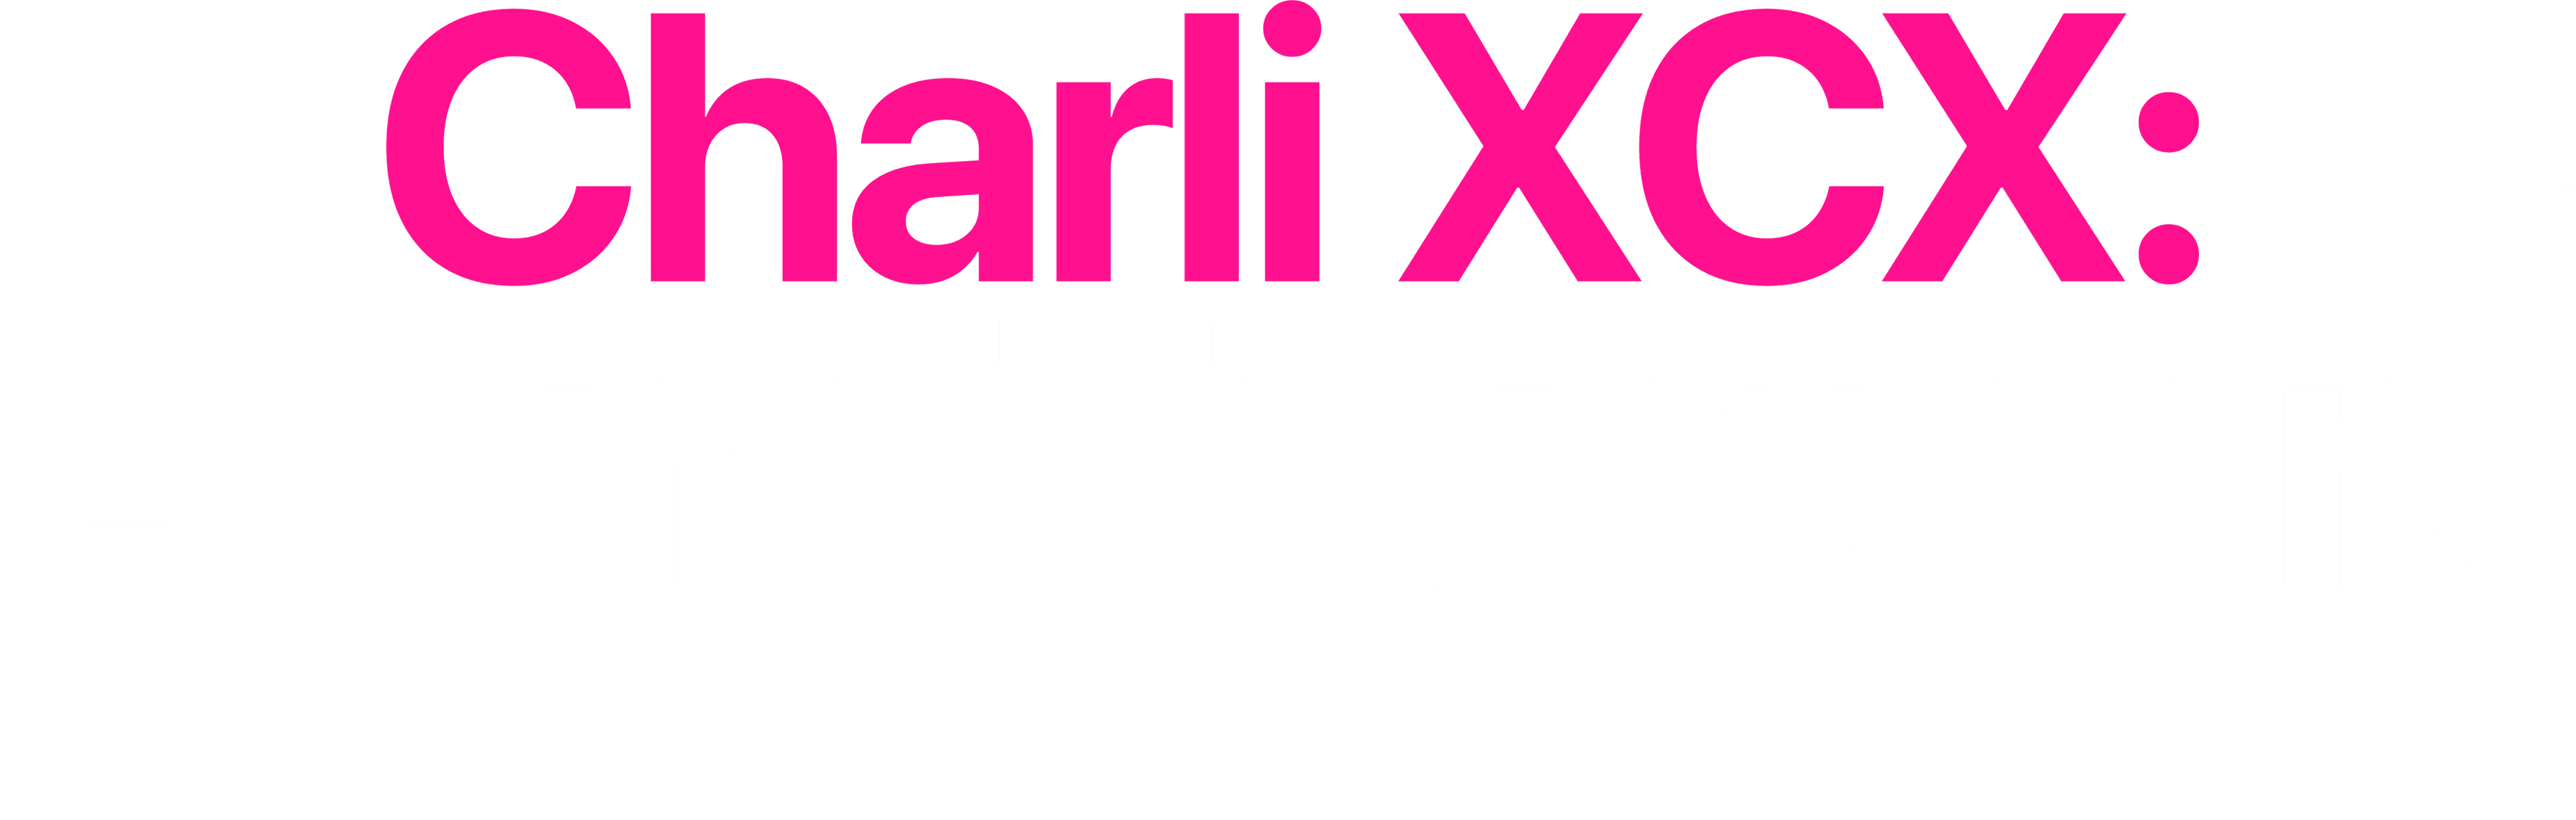 Charli XCX: Alone Together logo